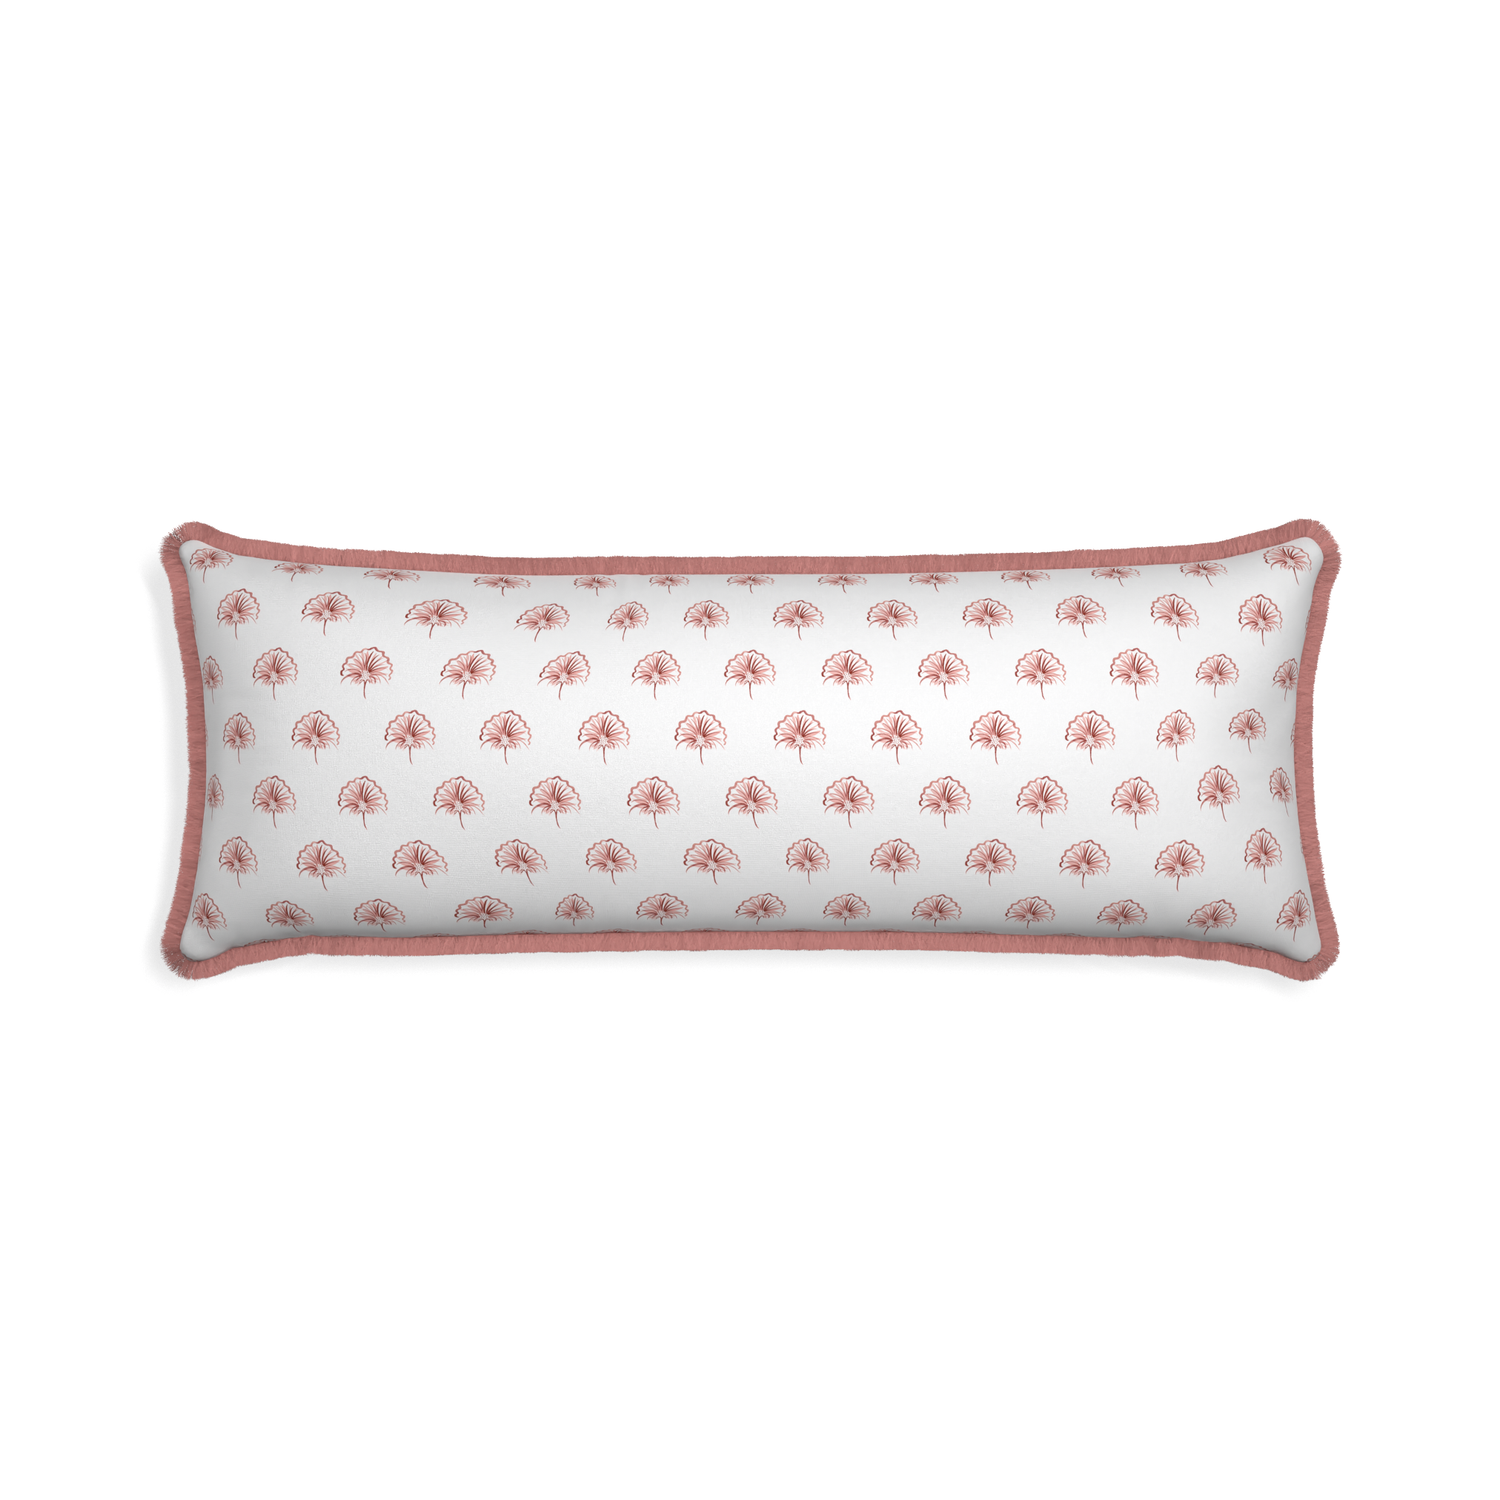 Xl-lumbar penelope rose custom pillow with d fringe on white background